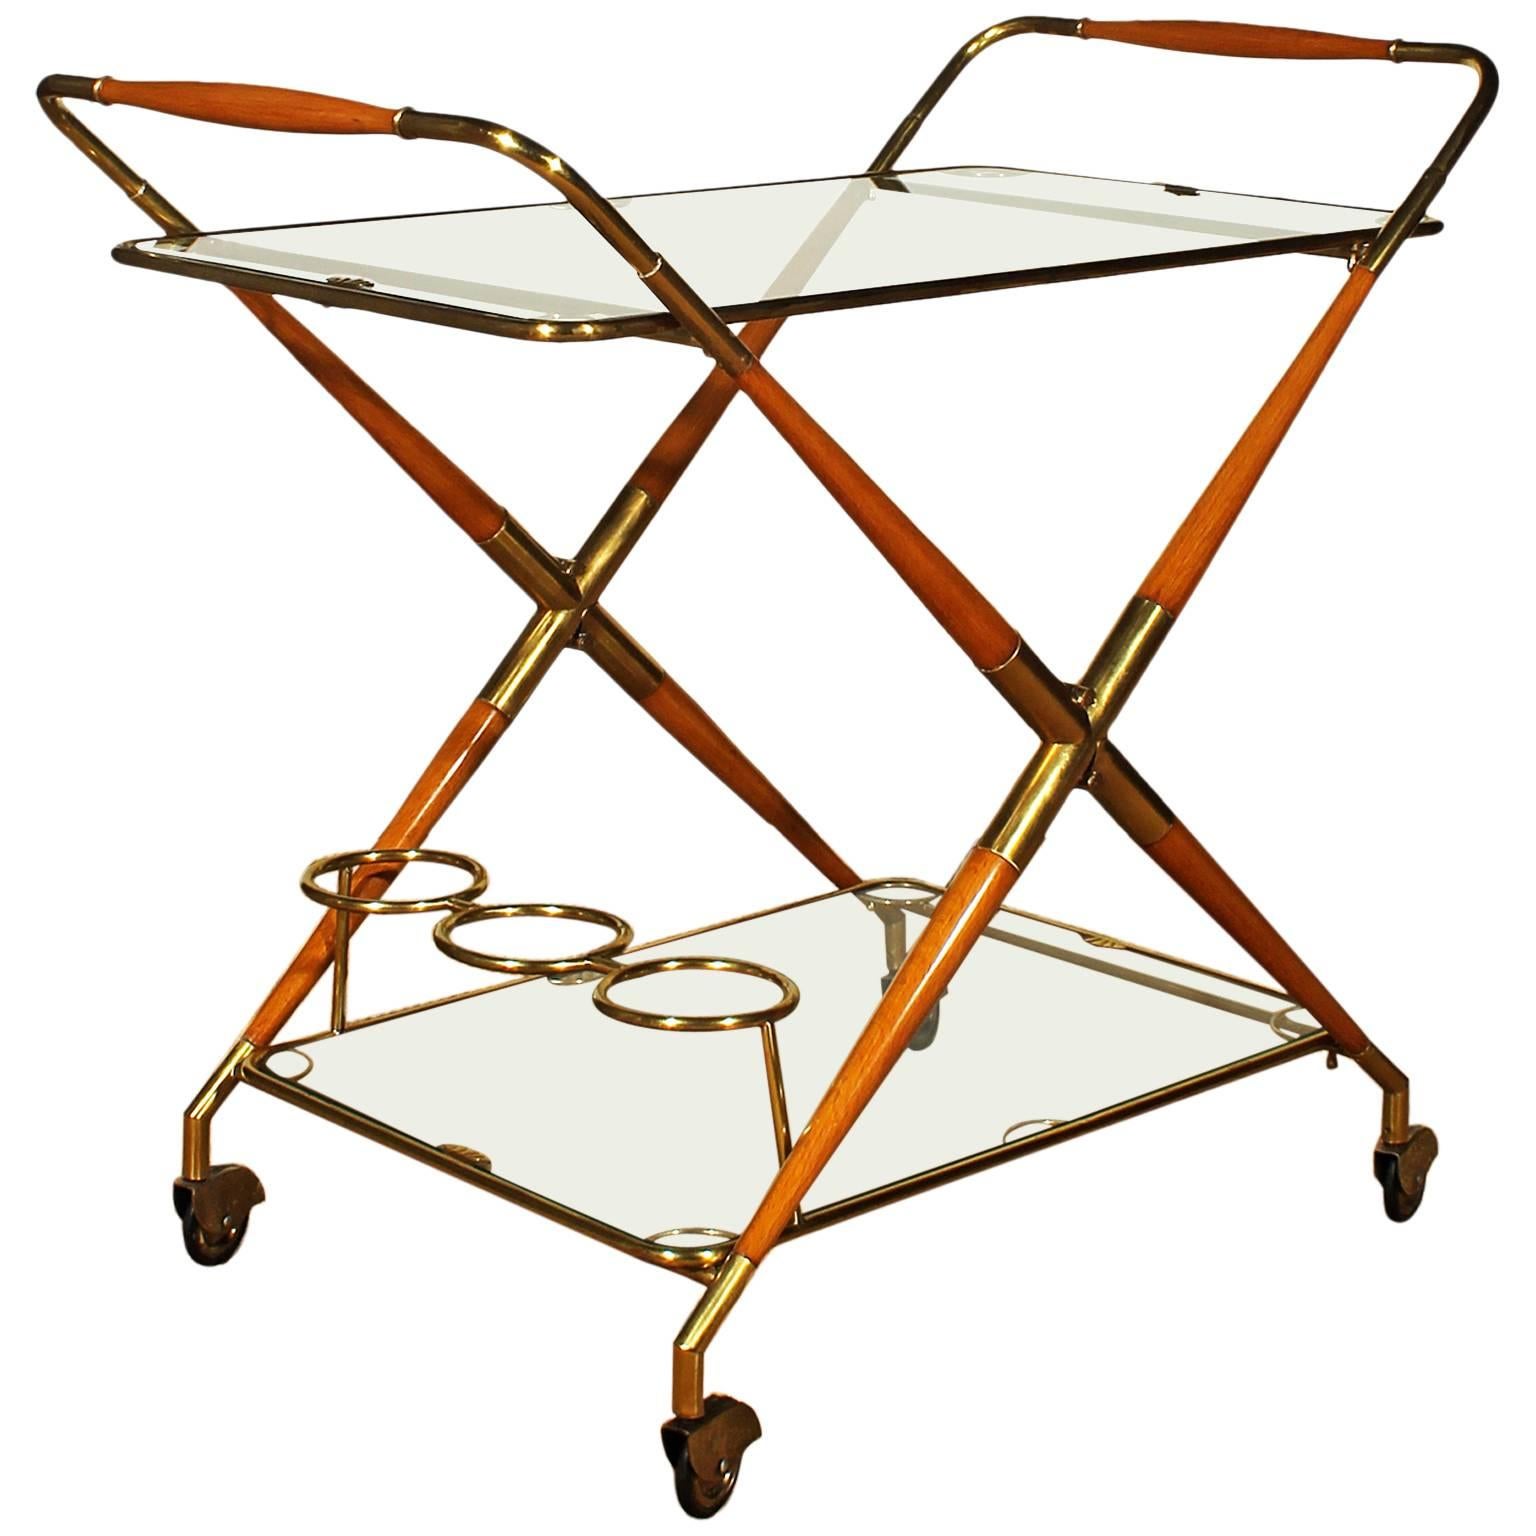 Italian Foldable Bar Cart from the 1950s